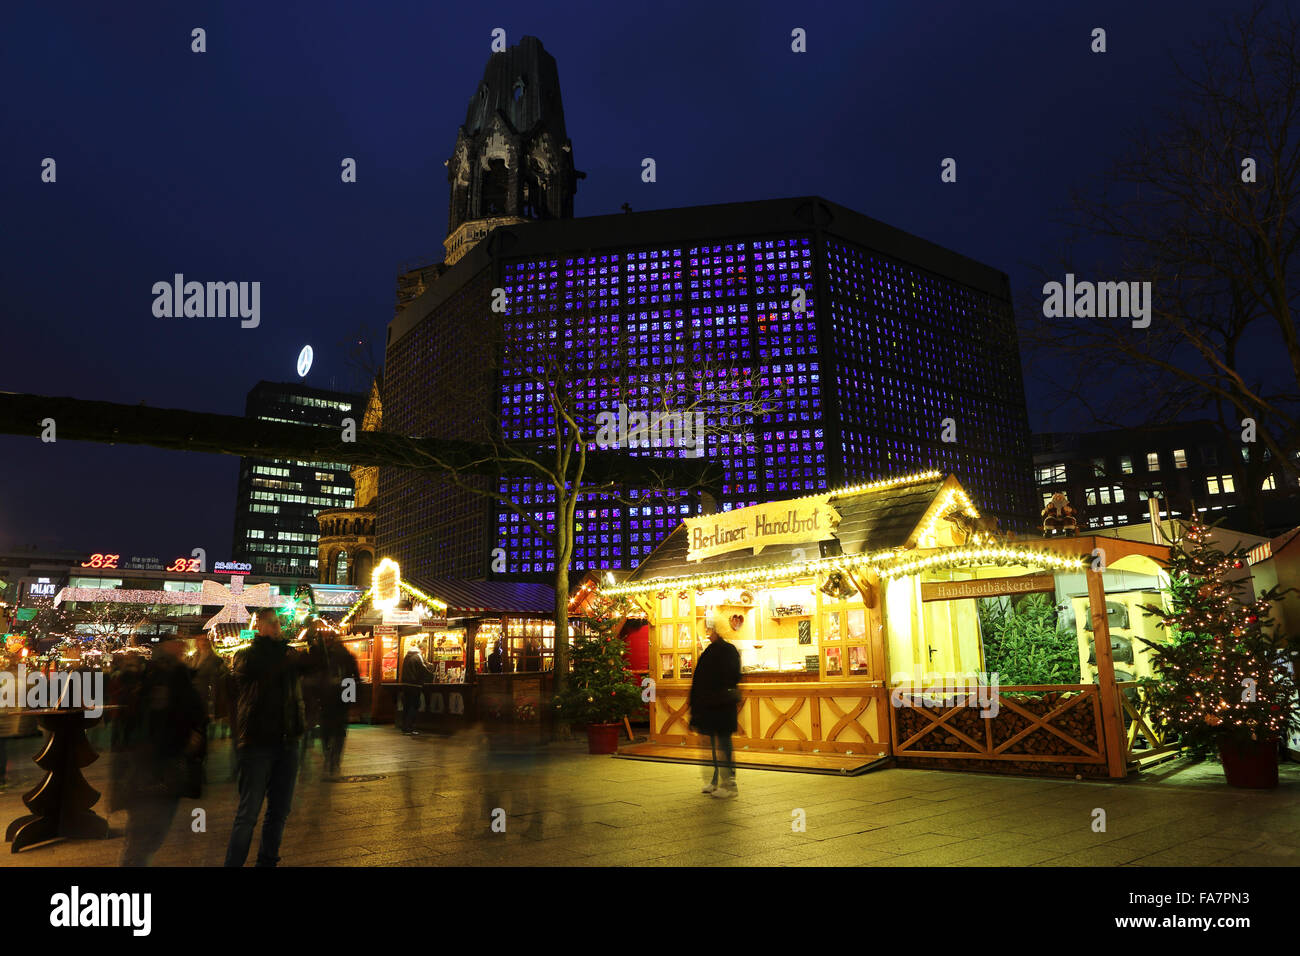 Stalls at the City Weihnachtsmarkt am Gedachtniskirche Christmas market on Ku'damm in Berlin, Germany. Stock Photo